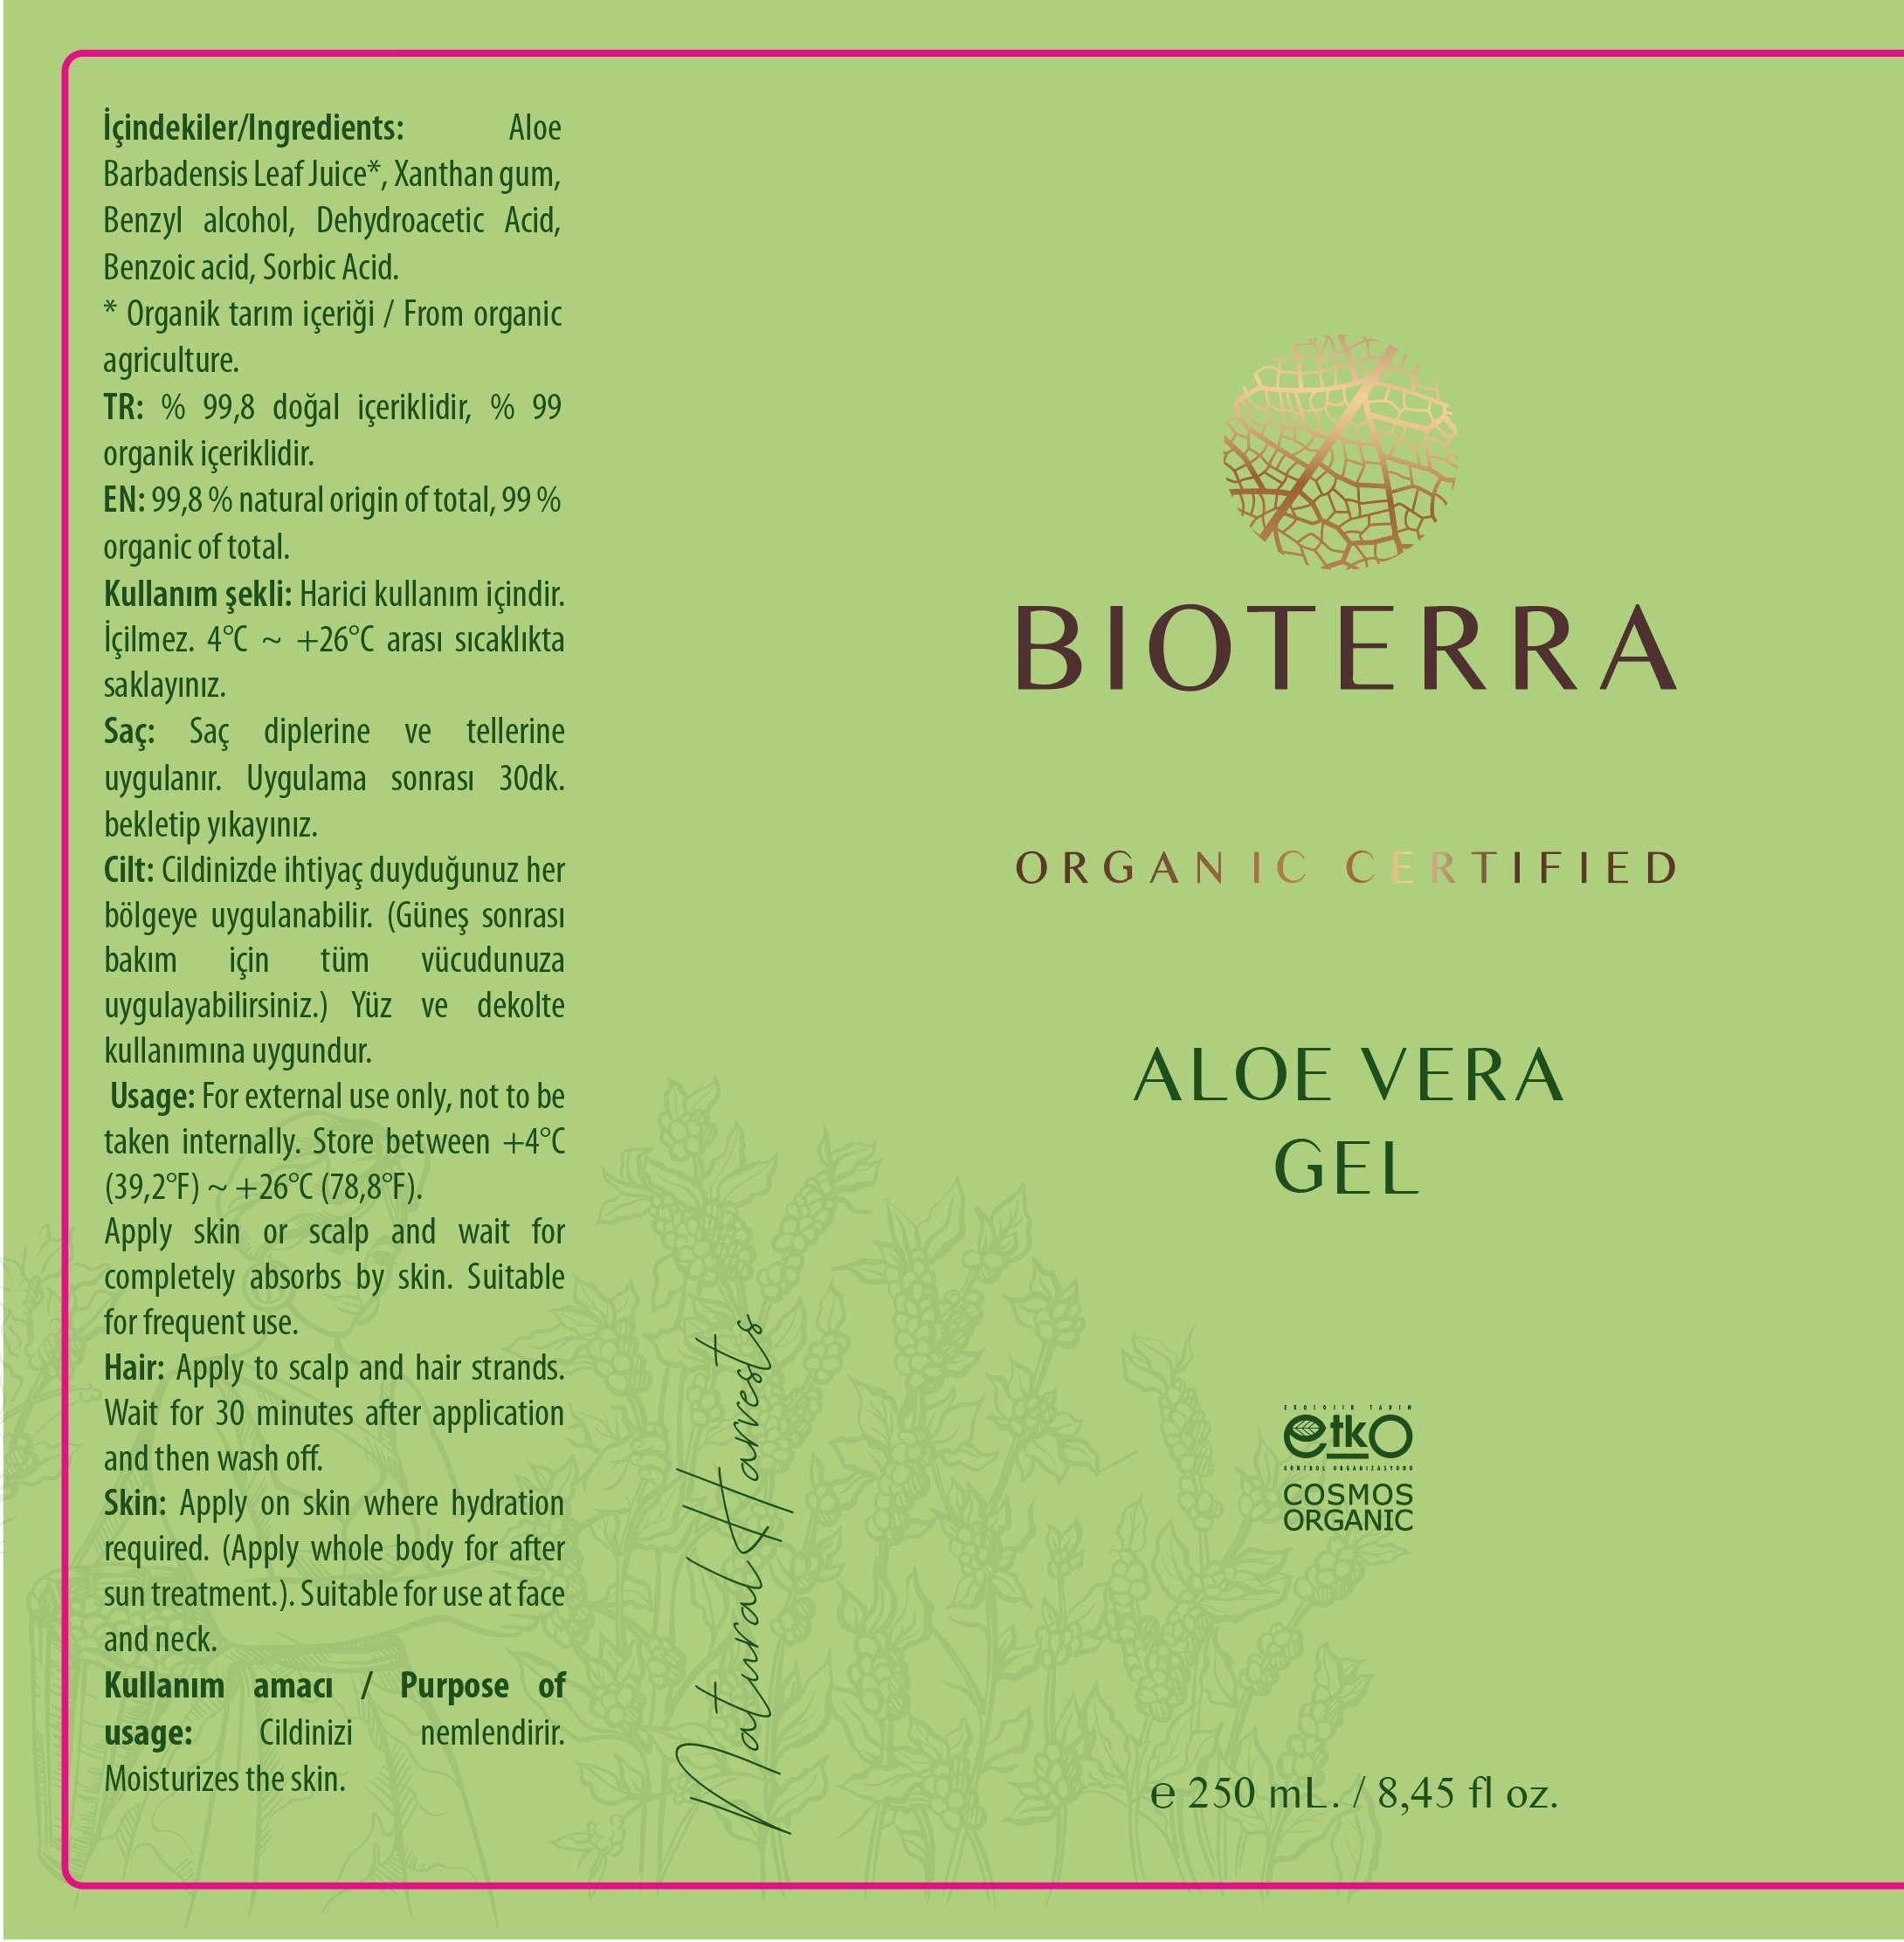 feuchtigkeitsspendend Vera, Gel Aloe 99% Aloe Körperpflegemittel Bio regenerierend Vera 1-tlg., BIOTERRA 250ml Aloe Vegan Vera 99% Naturkosmetik